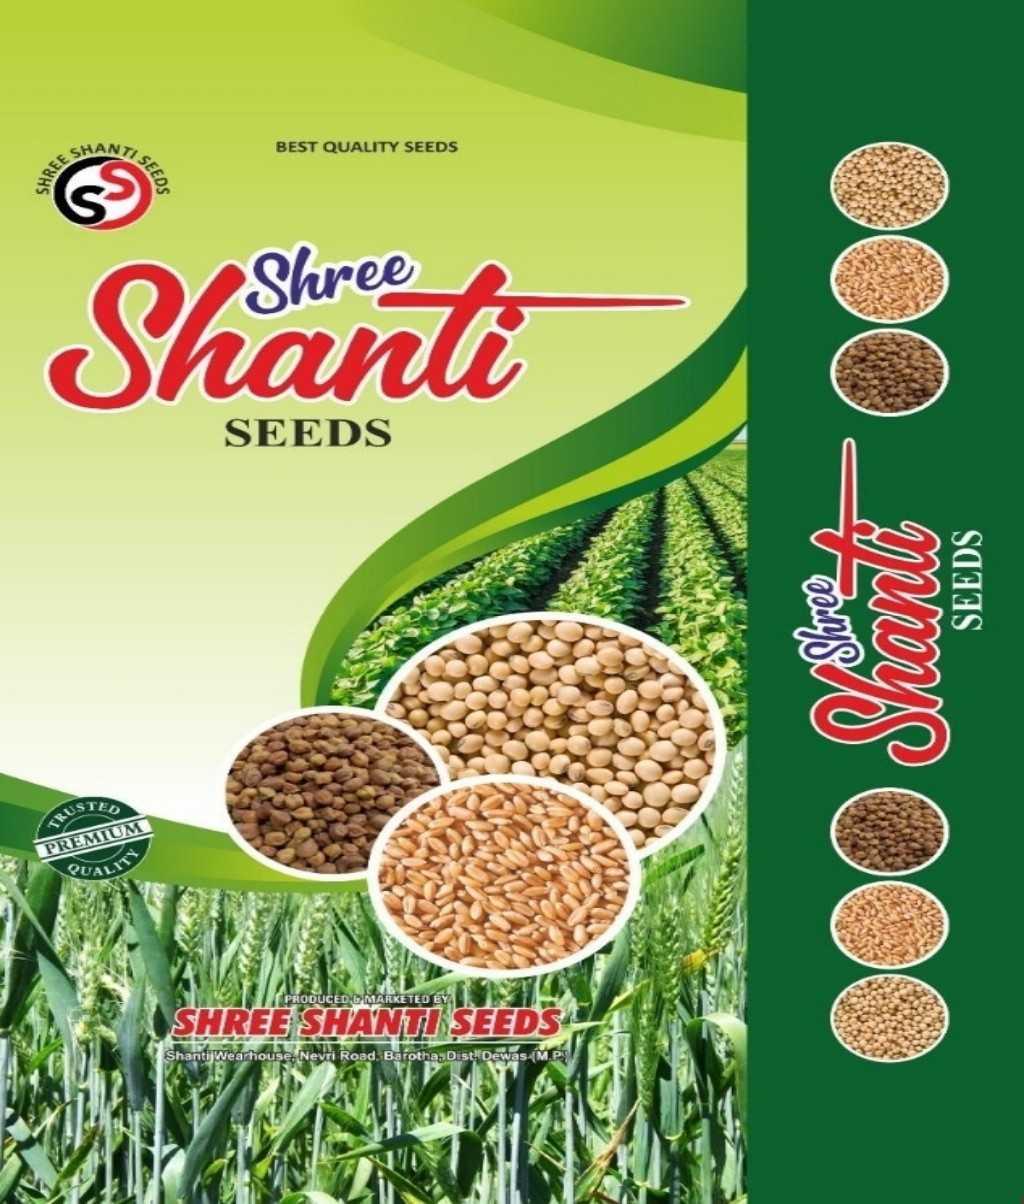 Shree Shanti Seeds